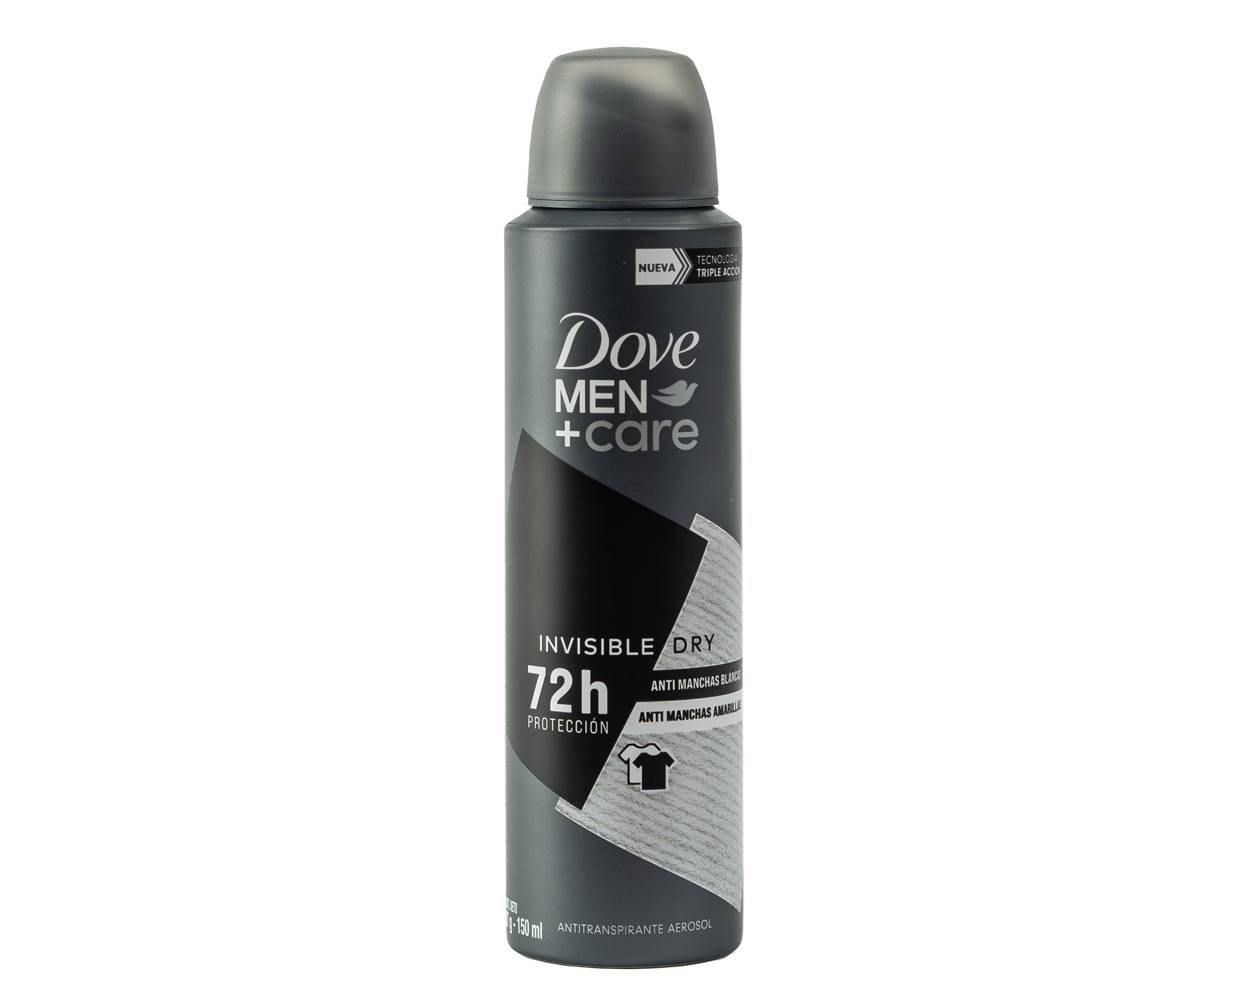 Dove desodorante spray men invisibl dry (89 ml)